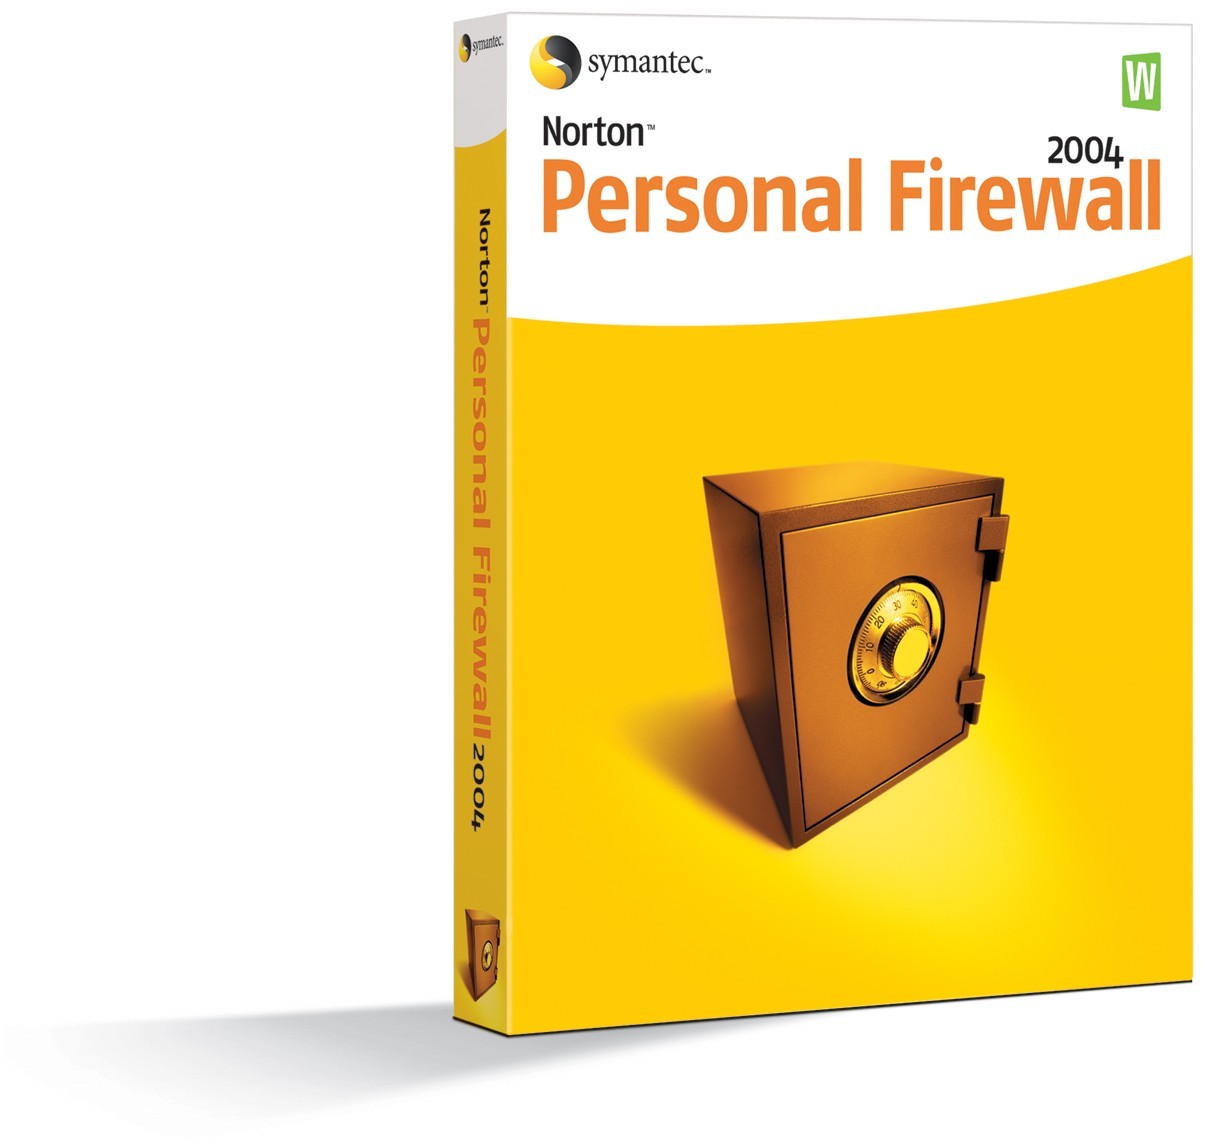 Norton Personal Firewall